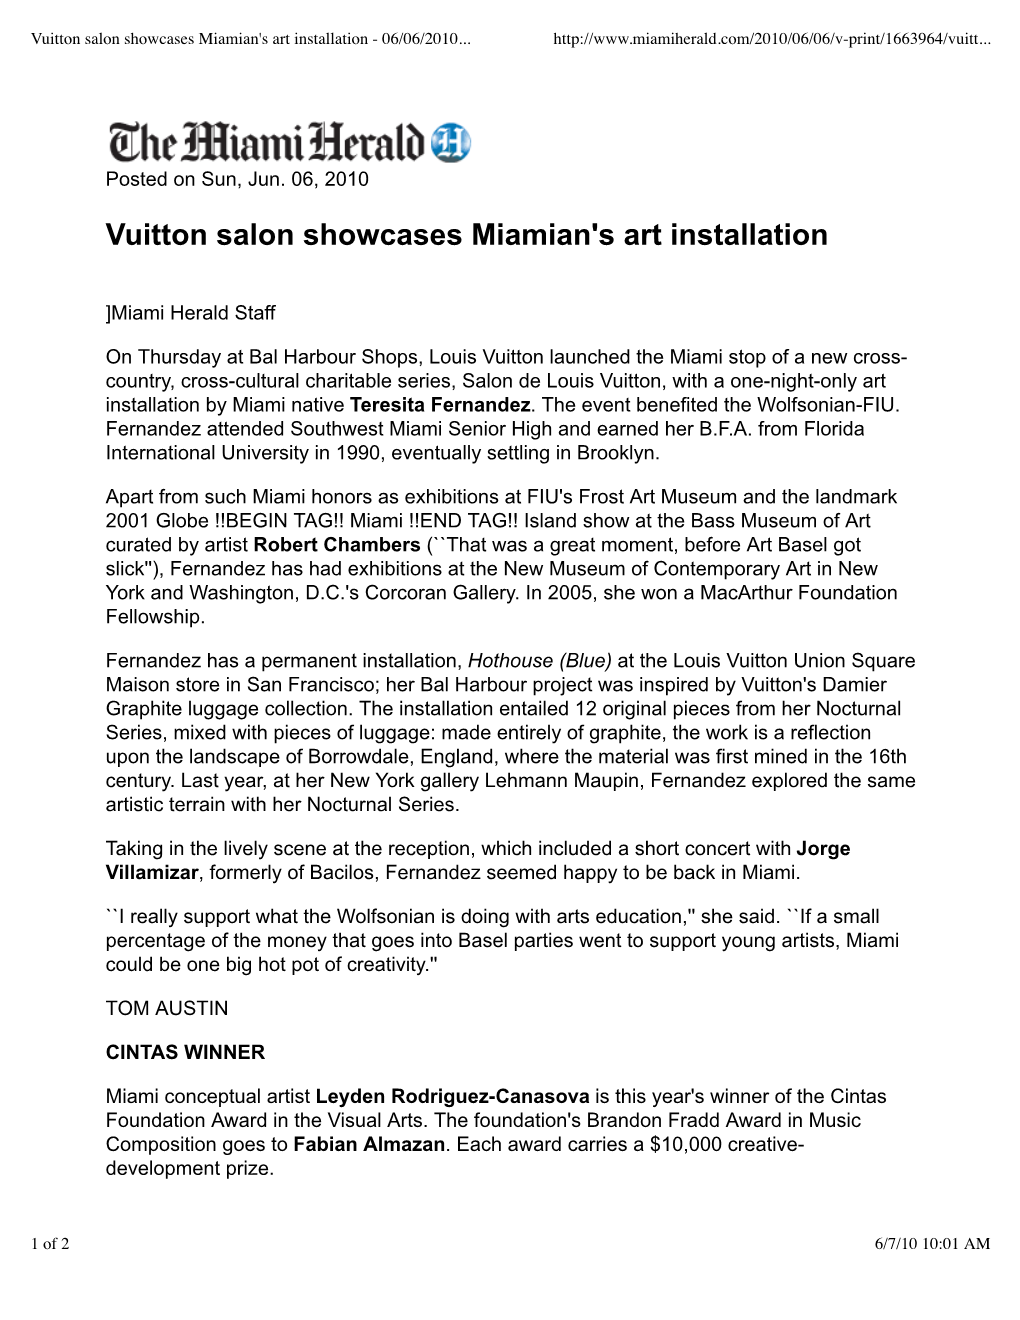 Vuitton Salon Showcases Miamian's Art Installation - 06/06/2010